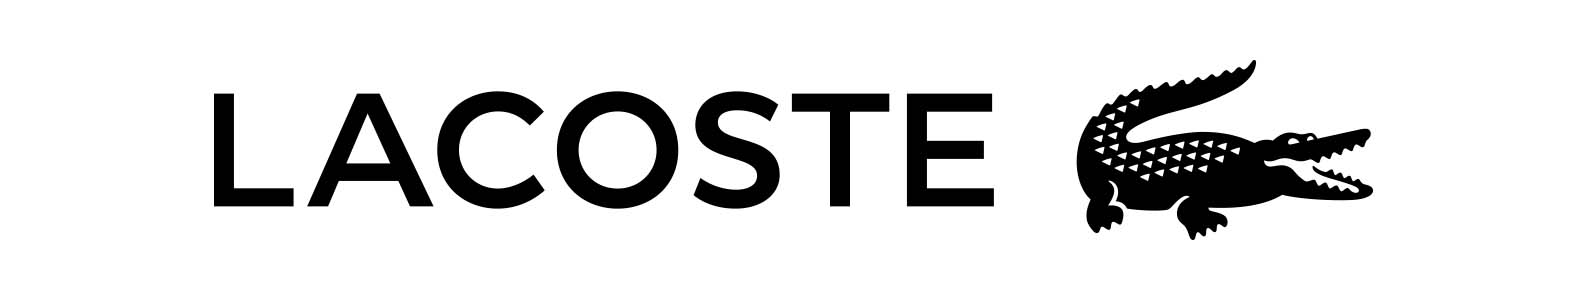 Lacoste brand header image